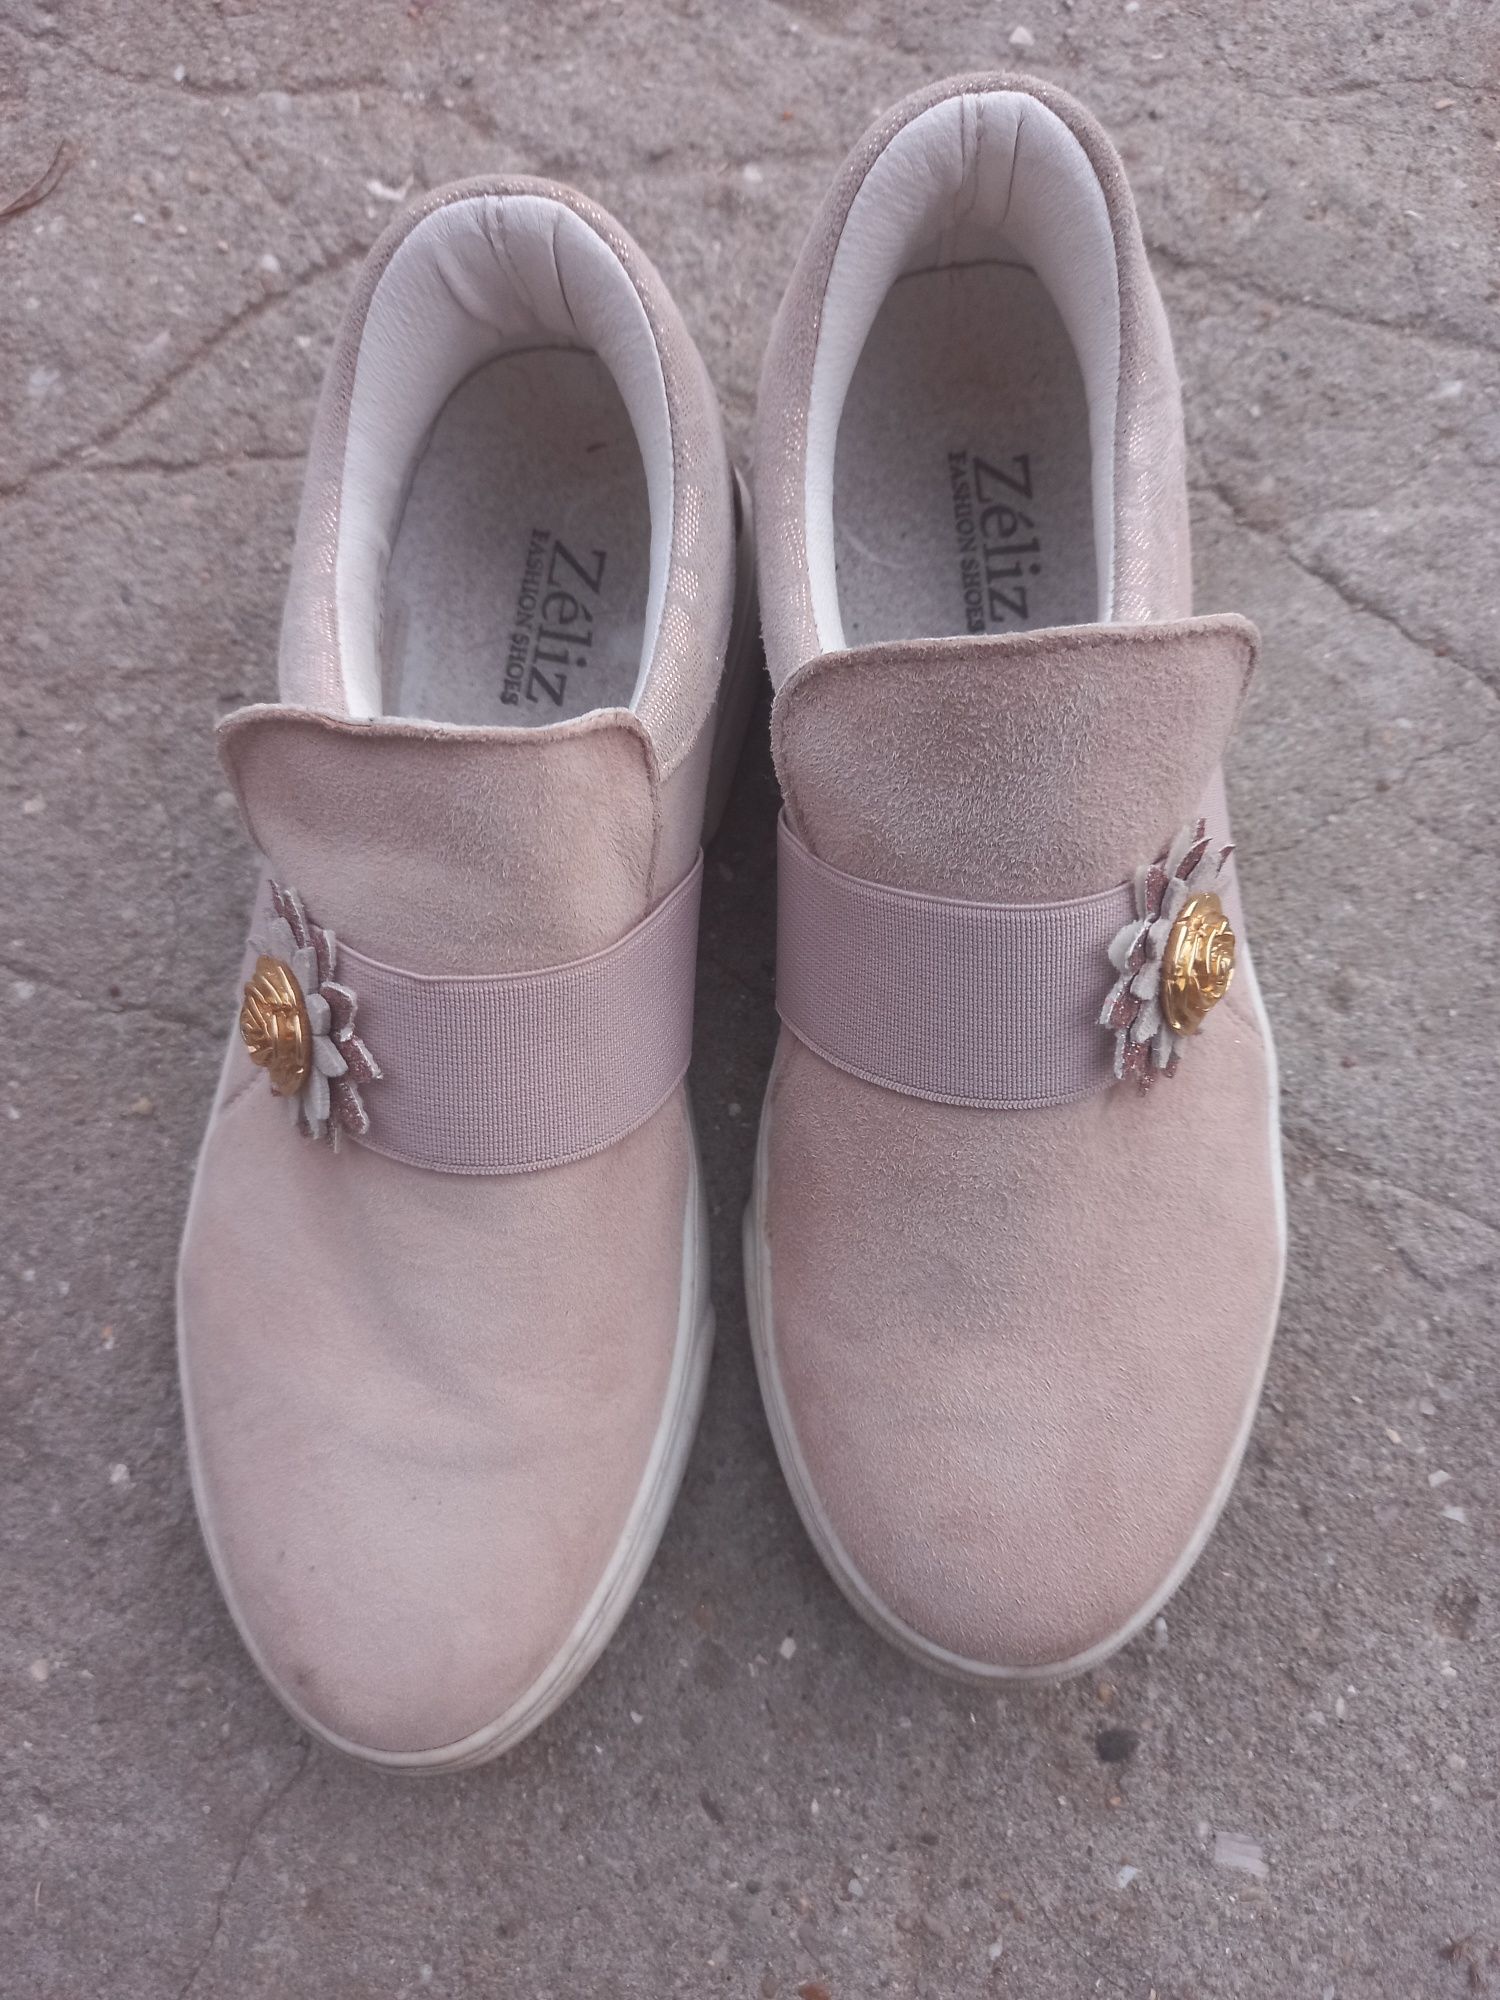 Sapatos cor de rosa ceremonial n33